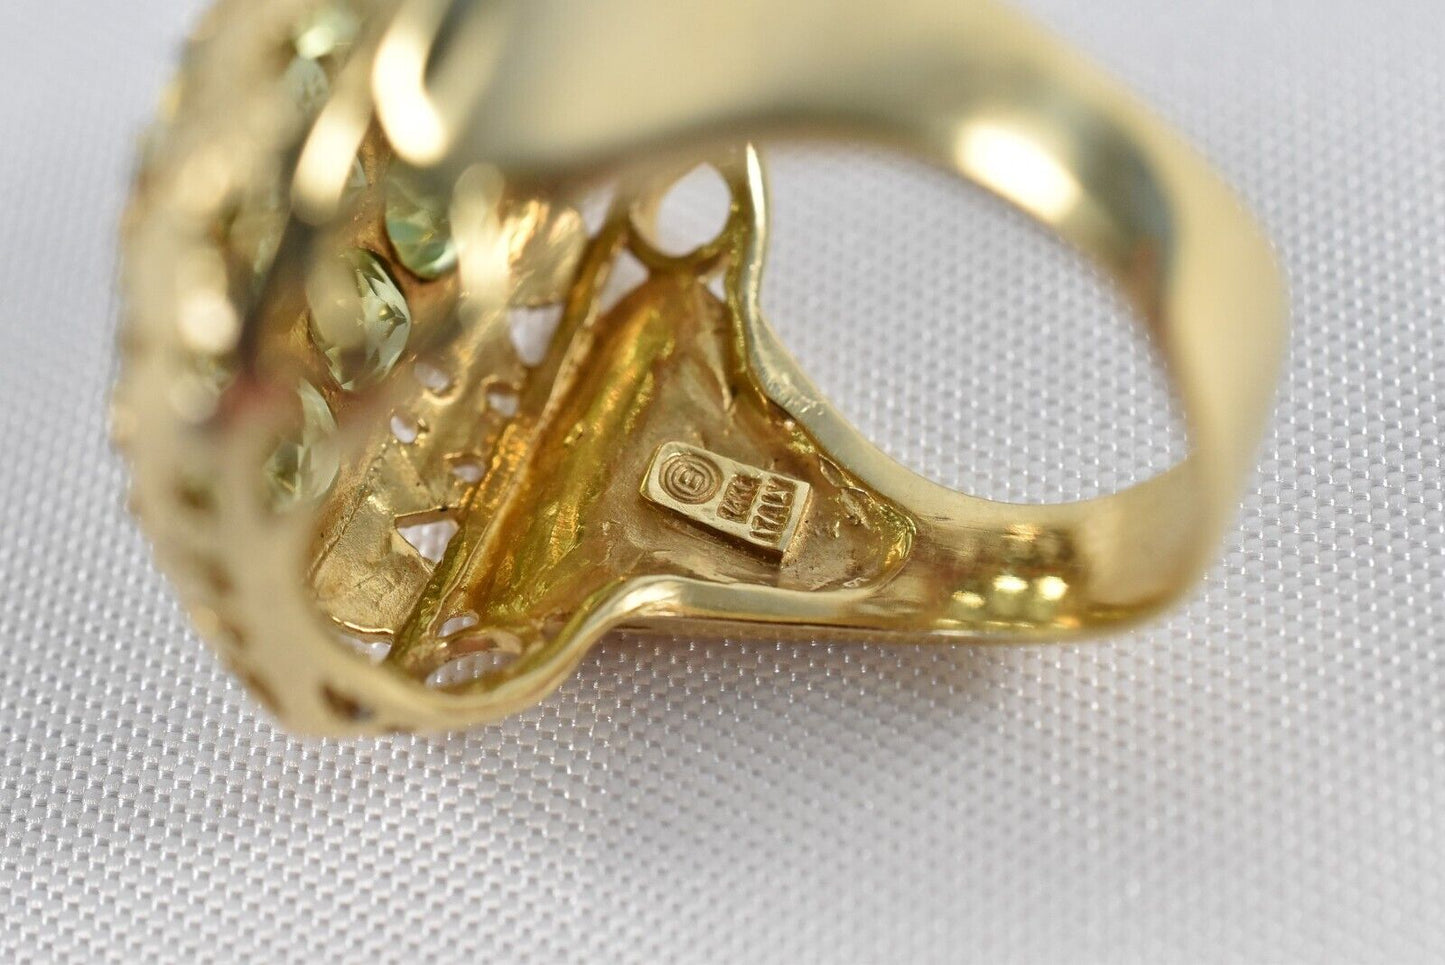 Vintage Burdick Co. 14k Yellow Gold Peridot Cluster Ring, Size 7 - 8.2g